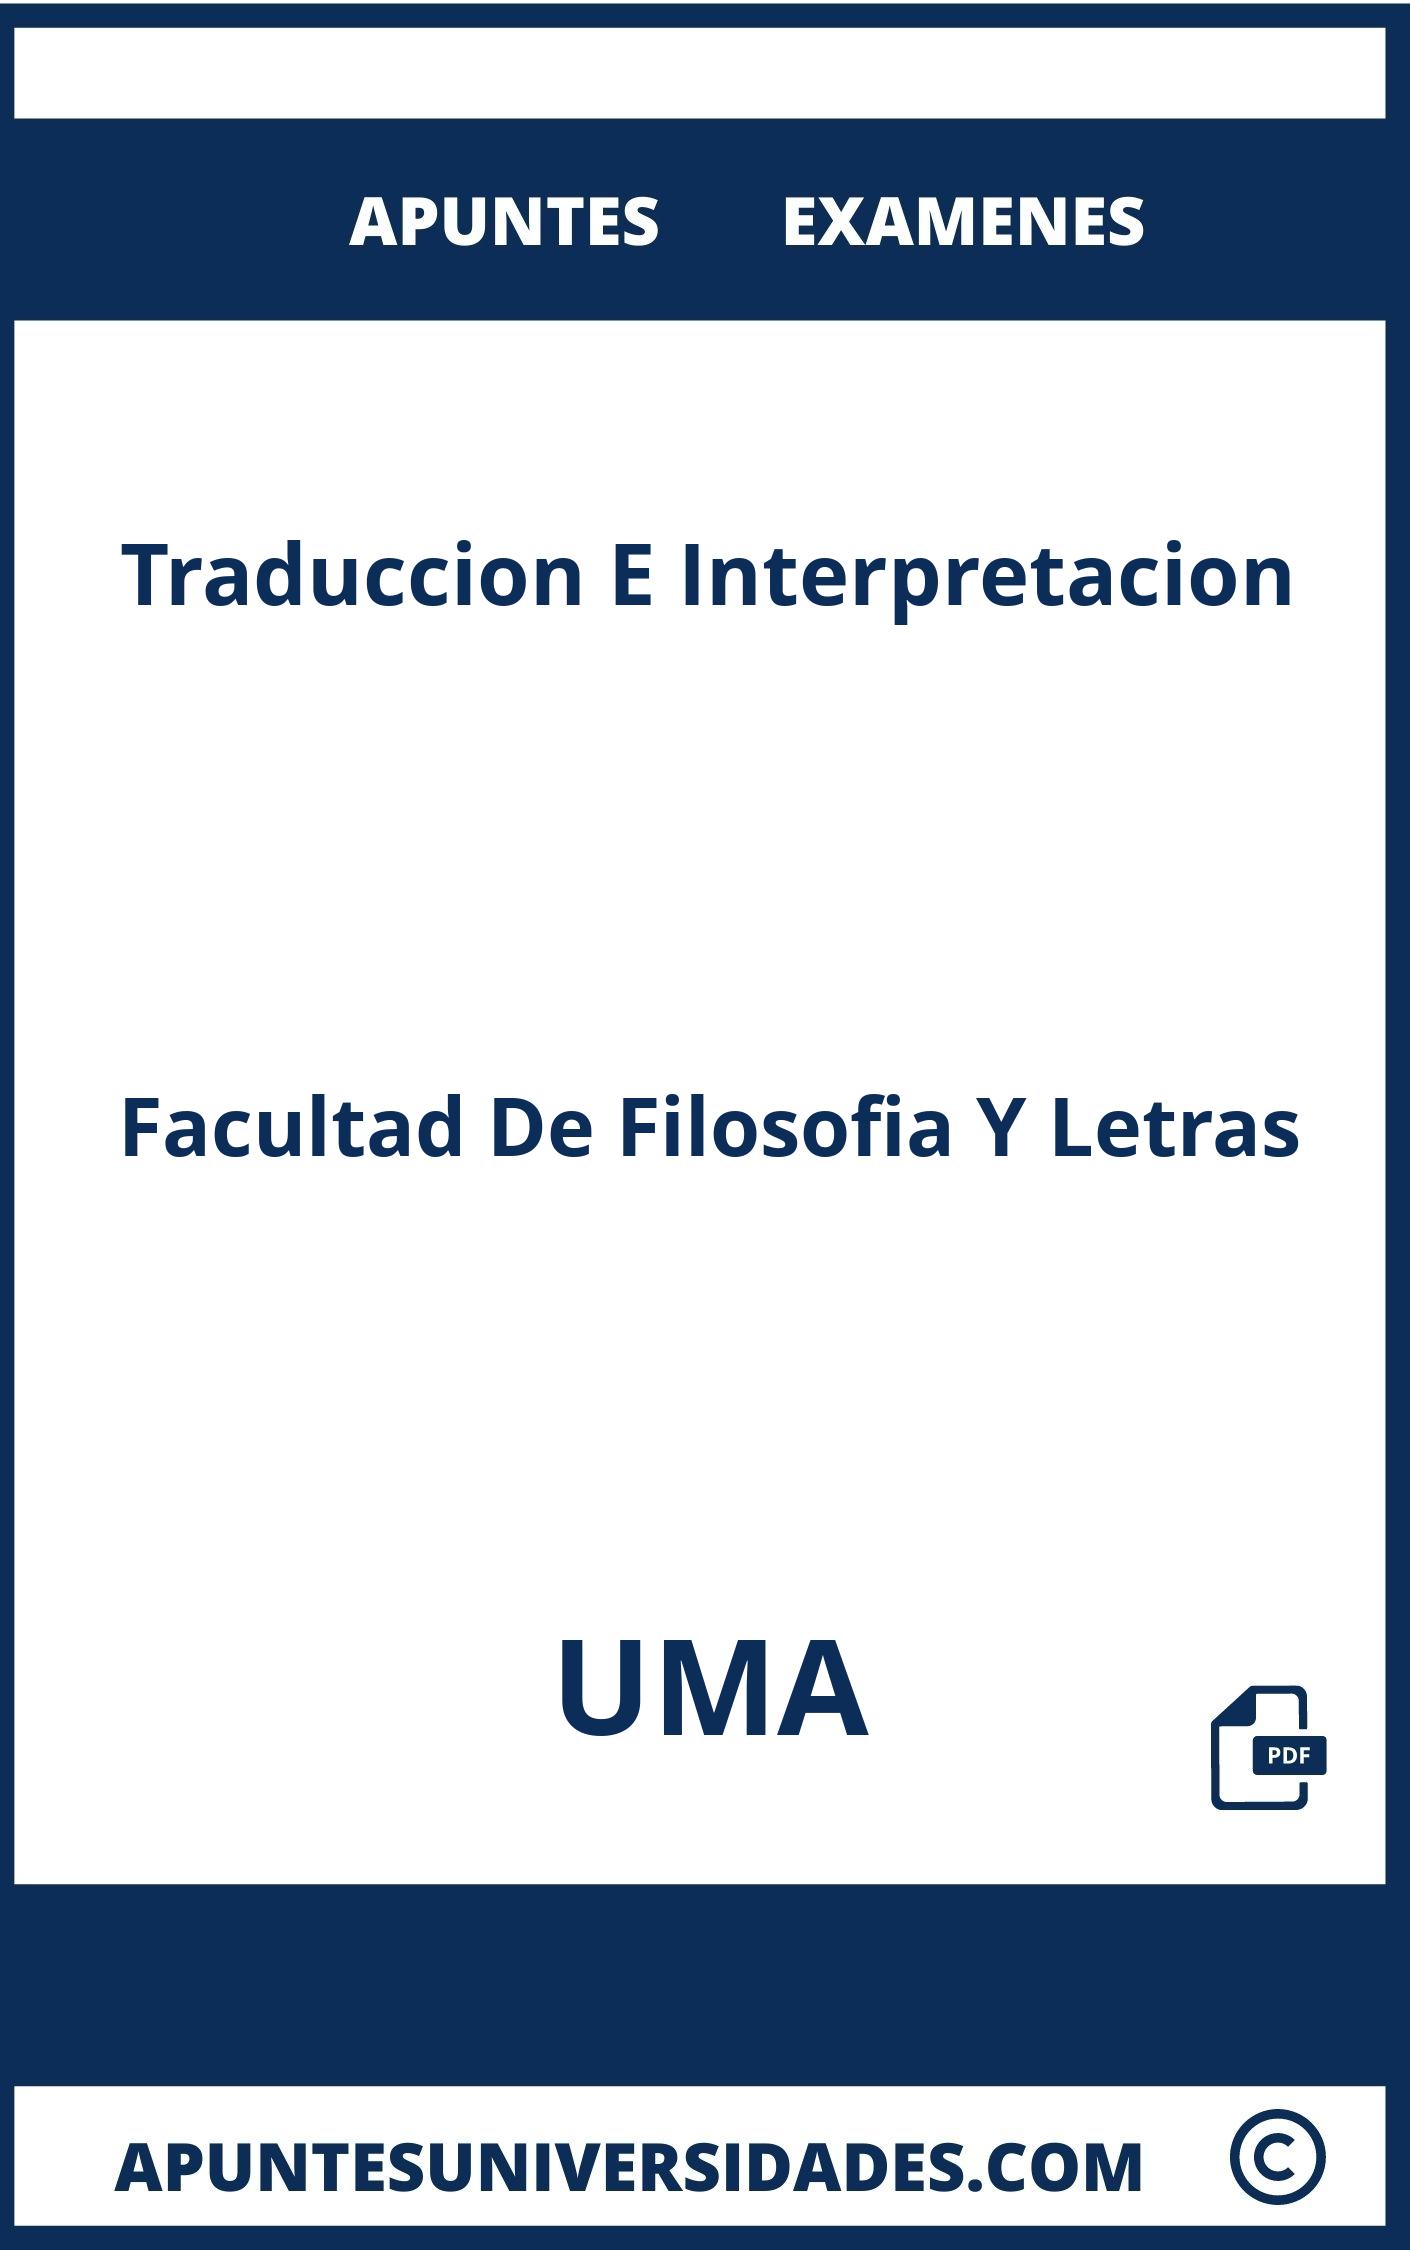 Traduccion E Interpretacion UMA Examenes Apuntes